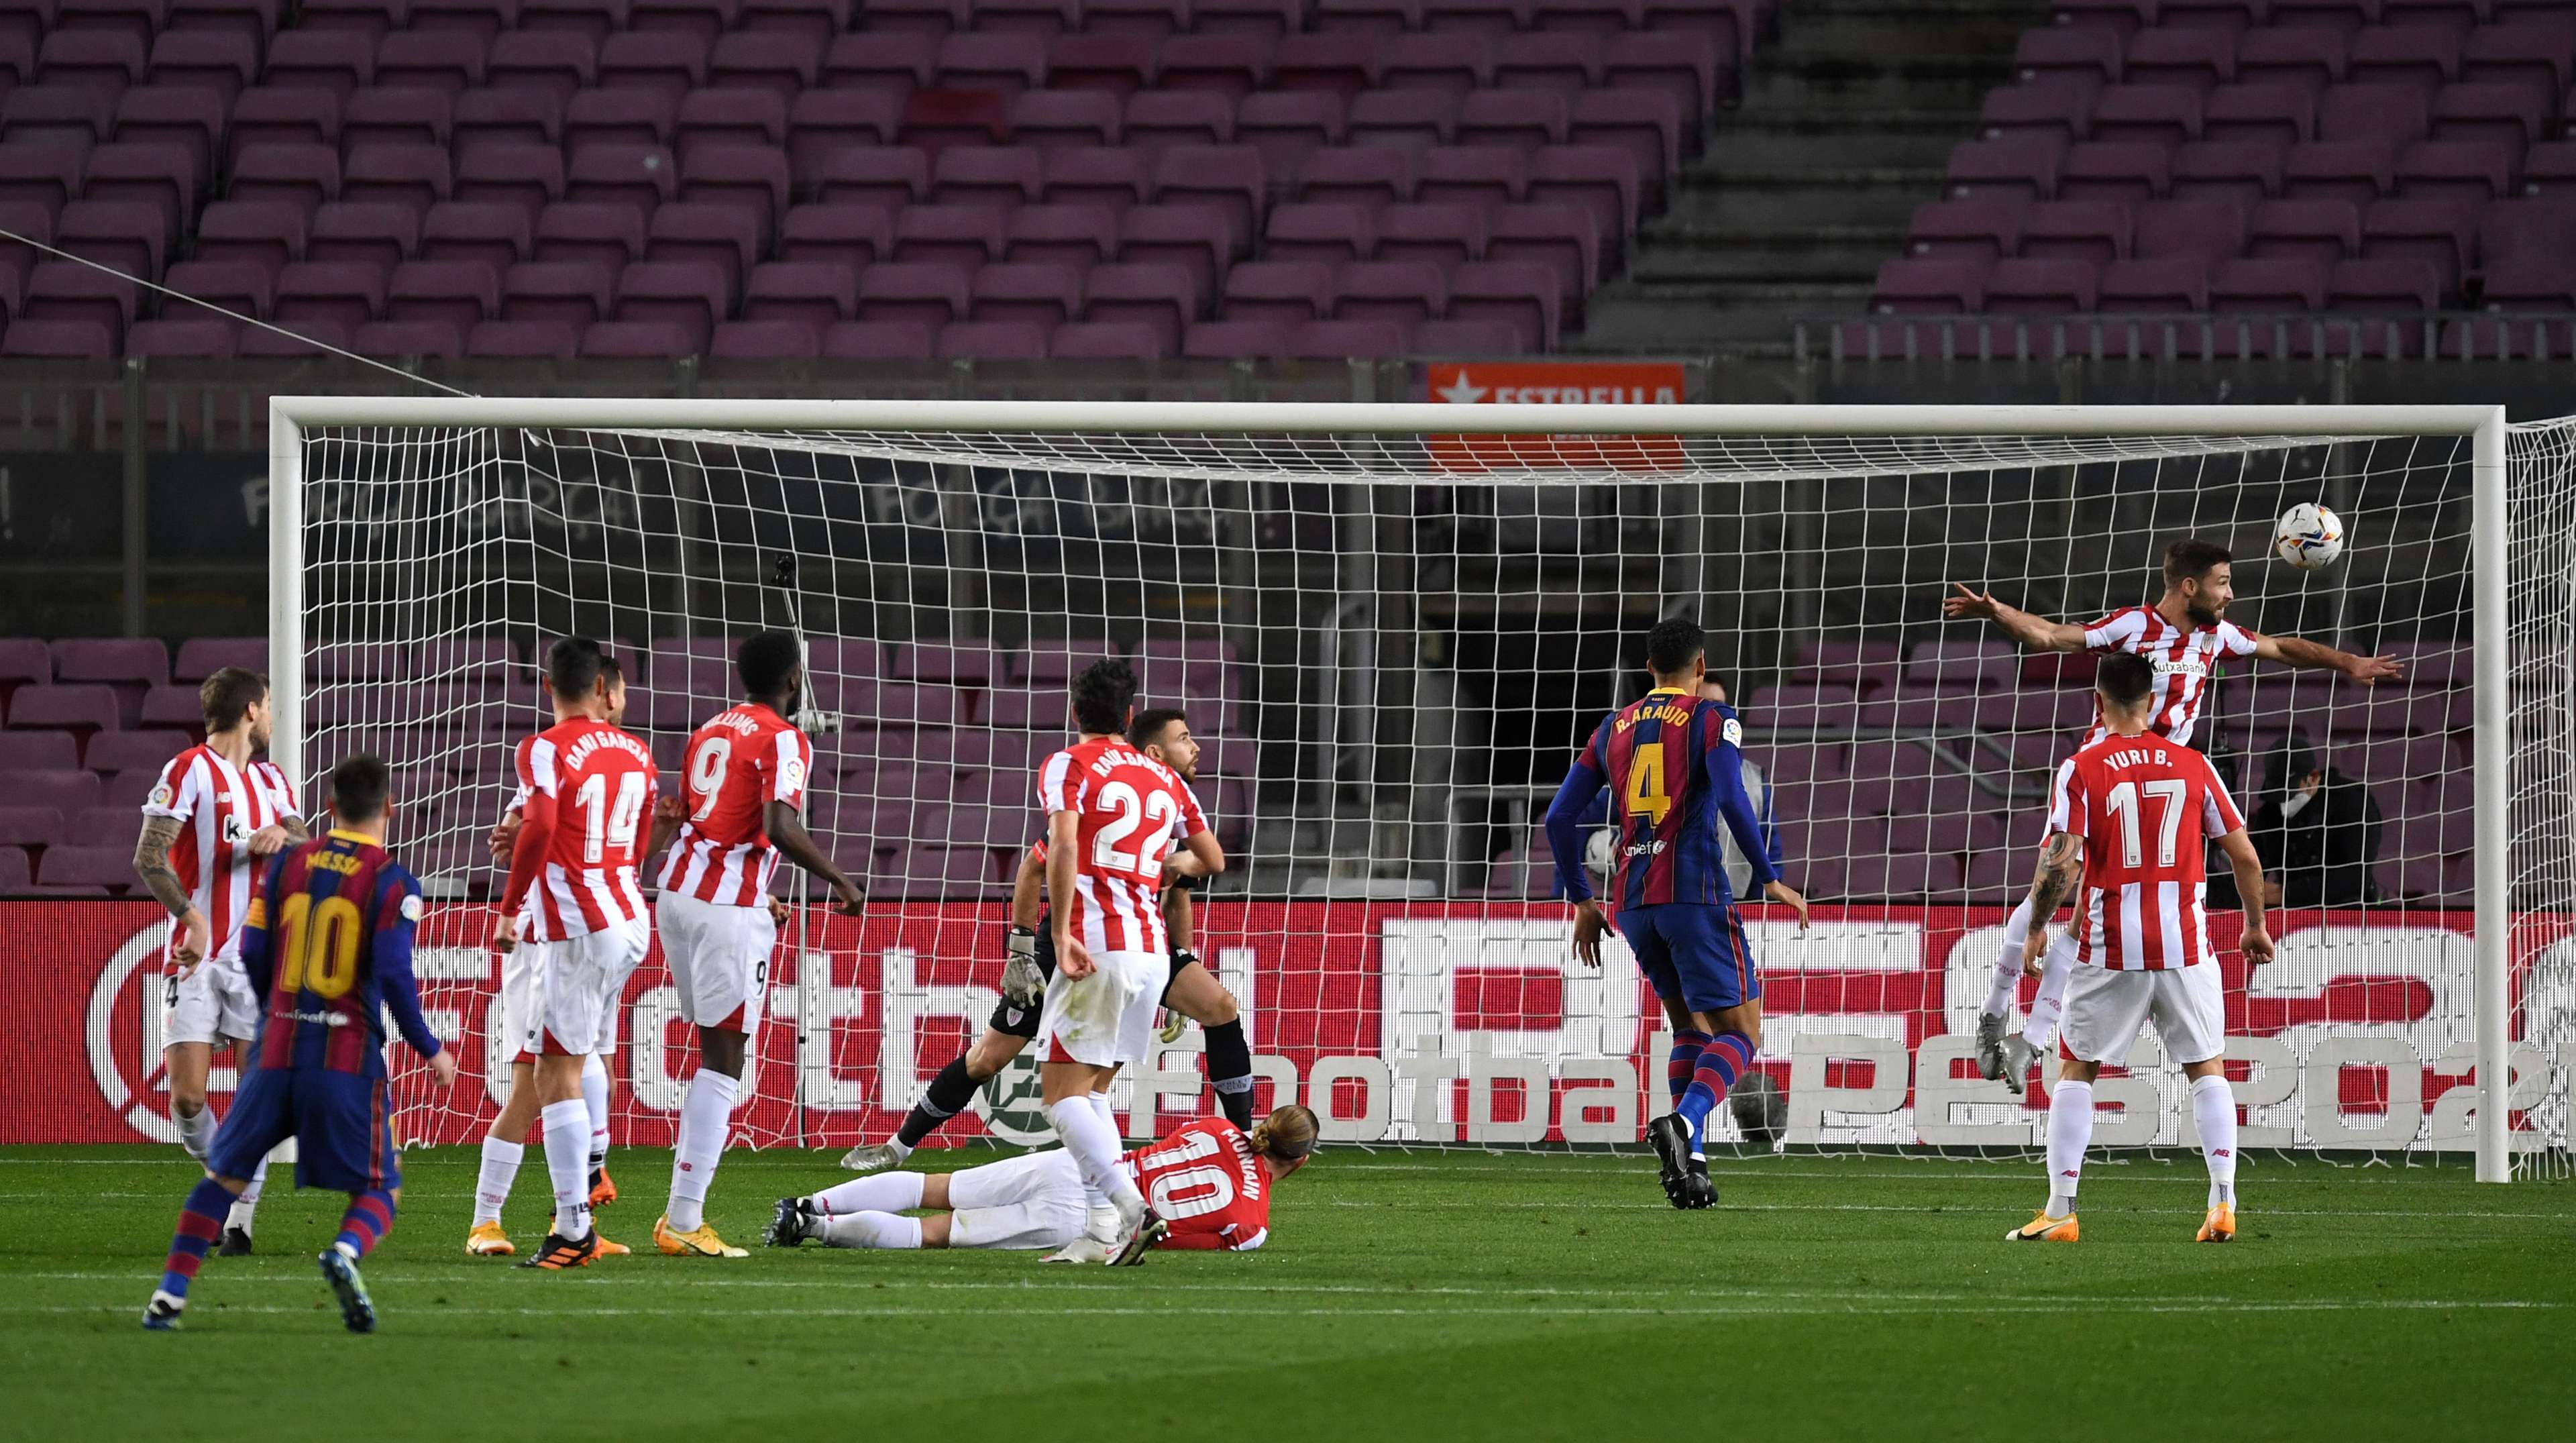 Lionel Messi Freekick Goal vs. Athletic Bilbao 01/31/21